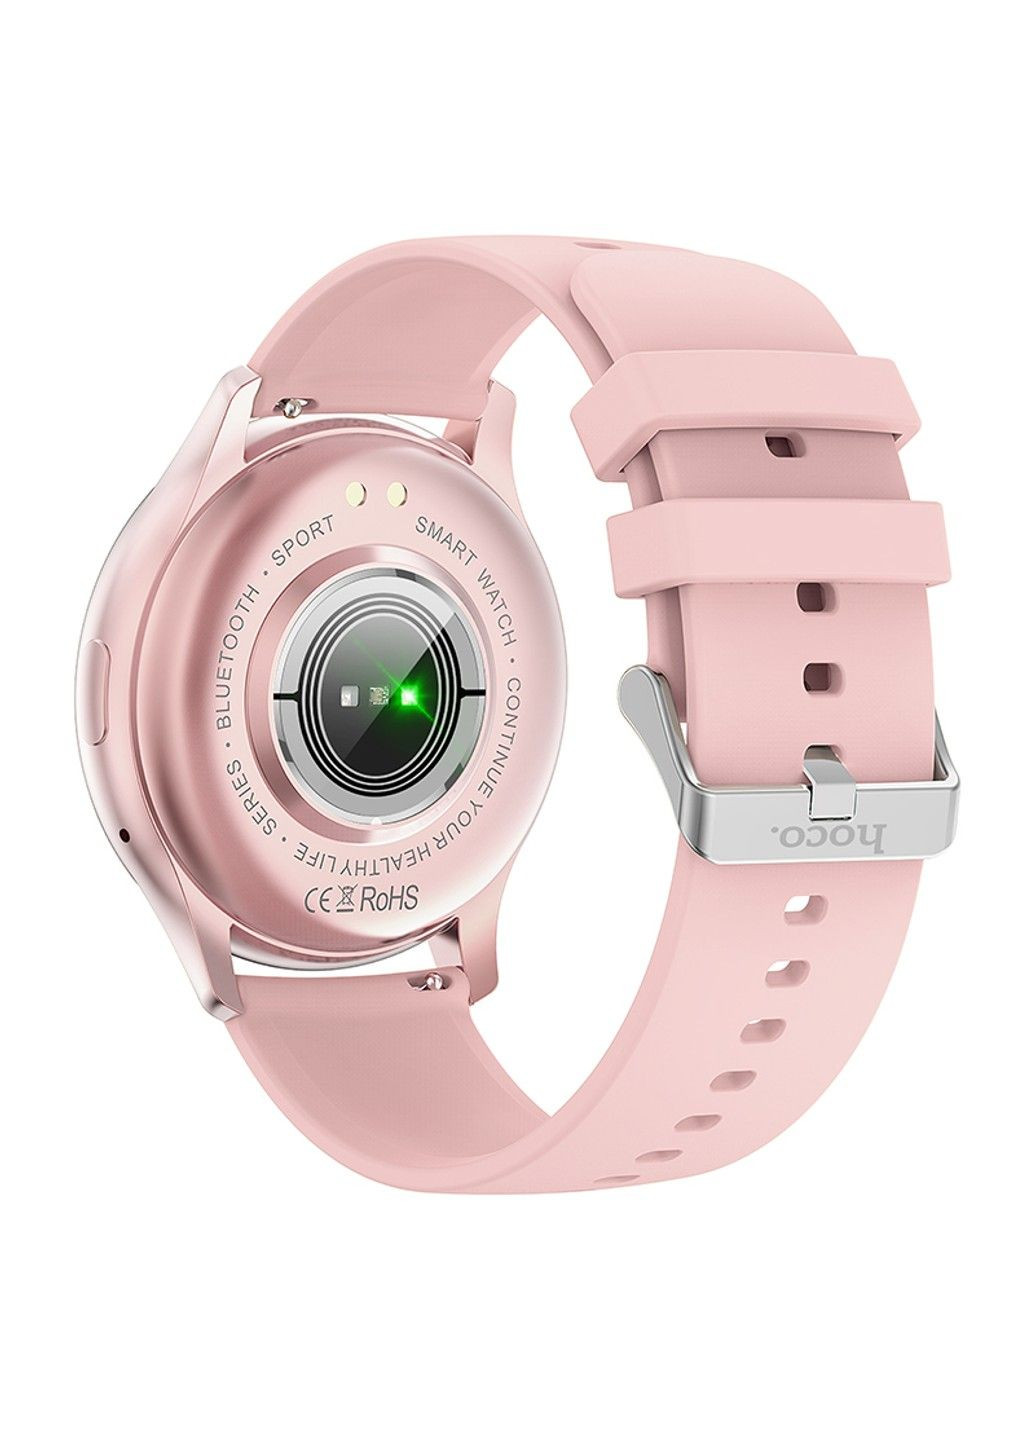 Смарт-часы Y15 Amoled Pink Hoco (282742448)